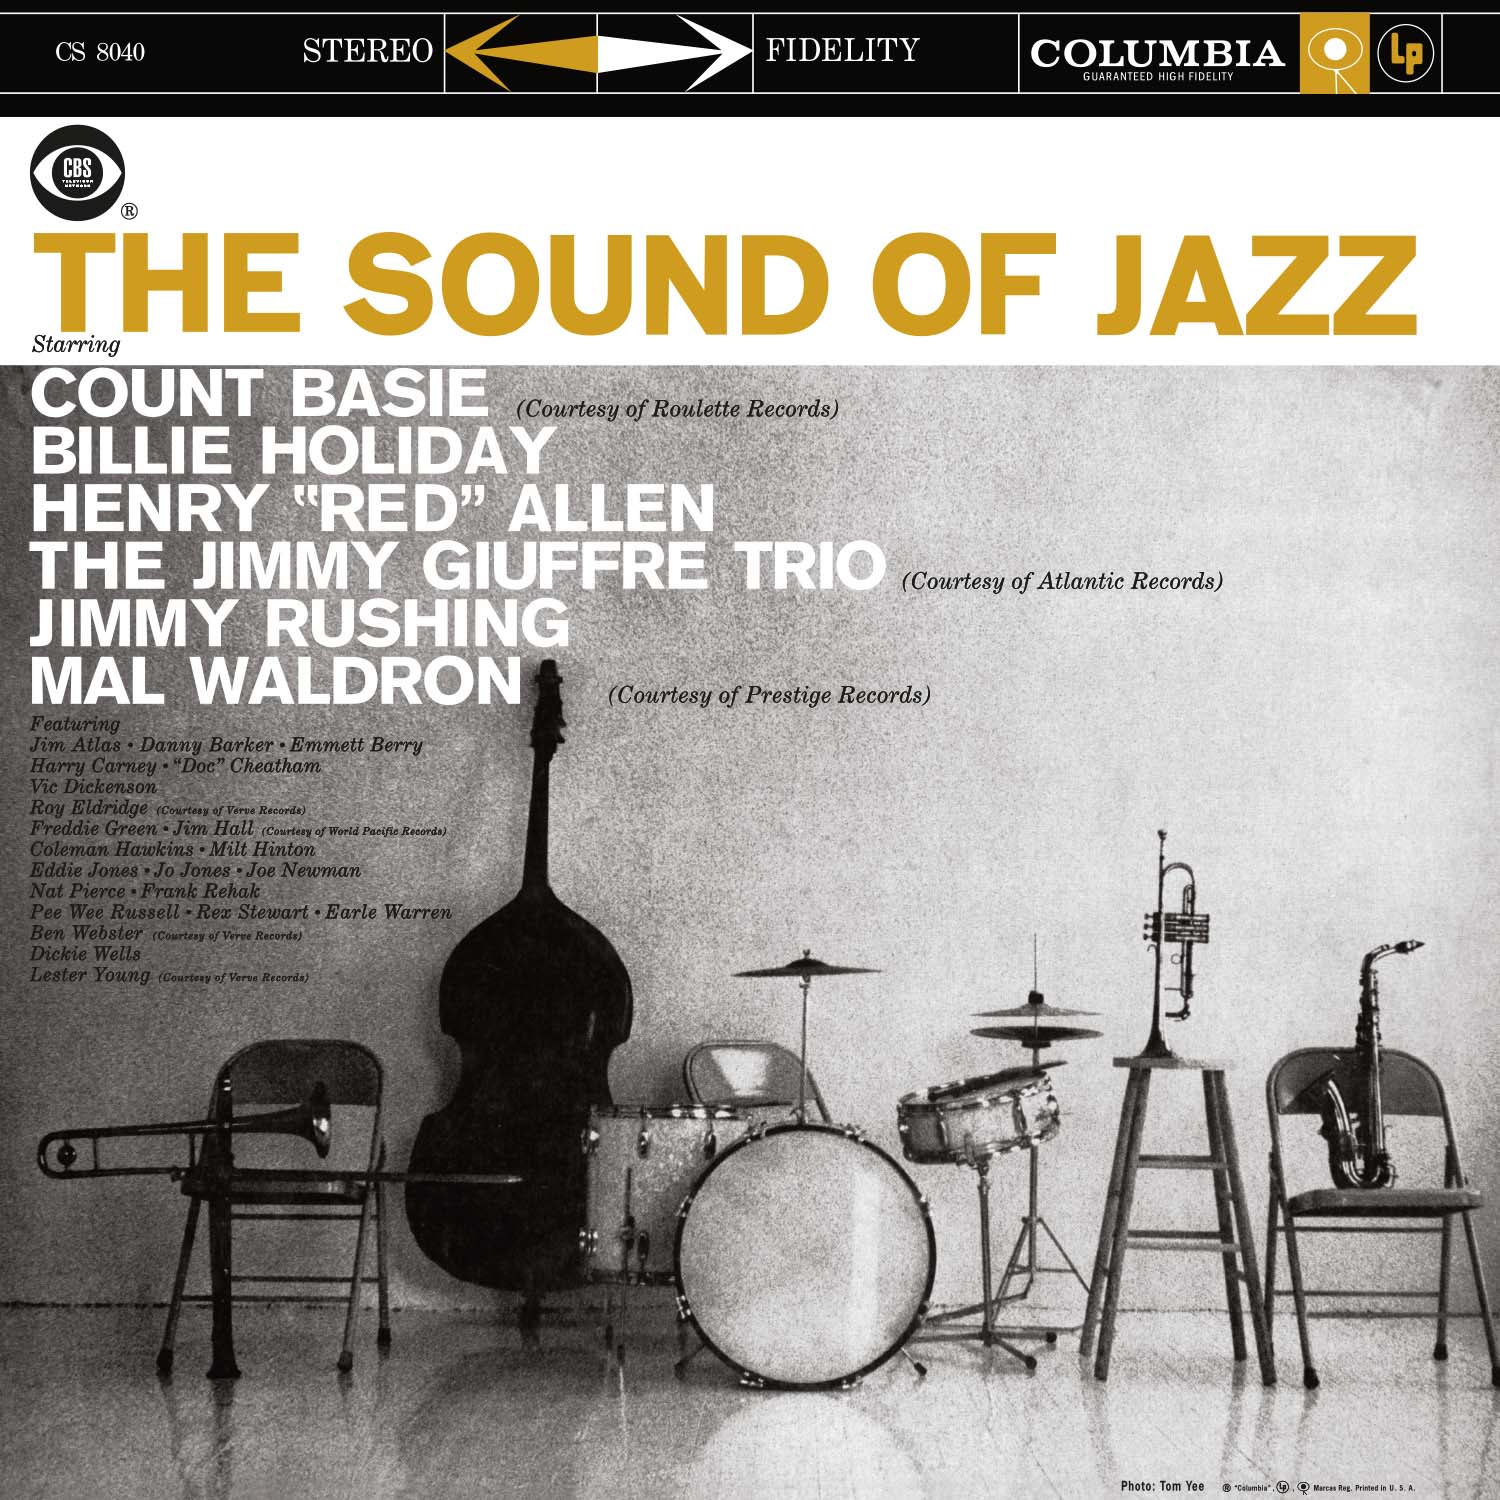 AAPJ 111 45 Sound Of Jazz